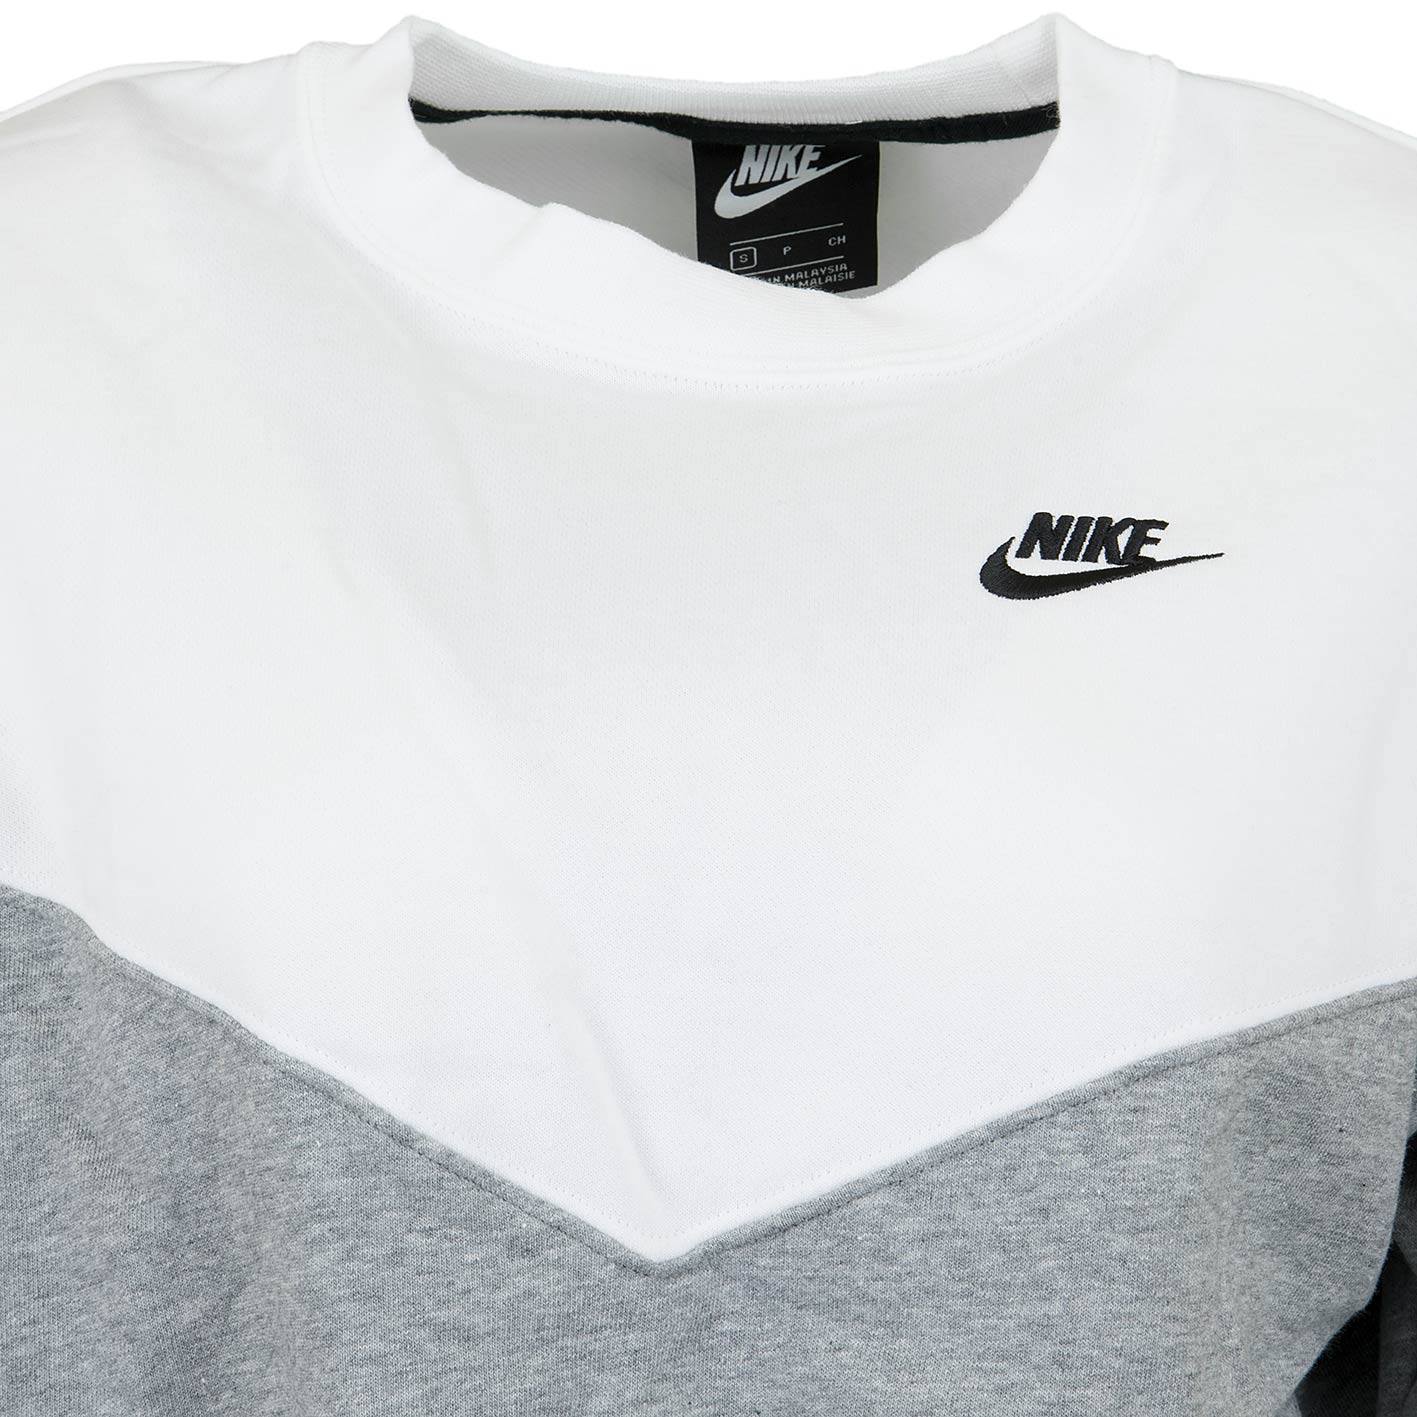 ☆ Nike Damen Sweatshirt Heritage Fleece grau/weiß - hier bestellen!